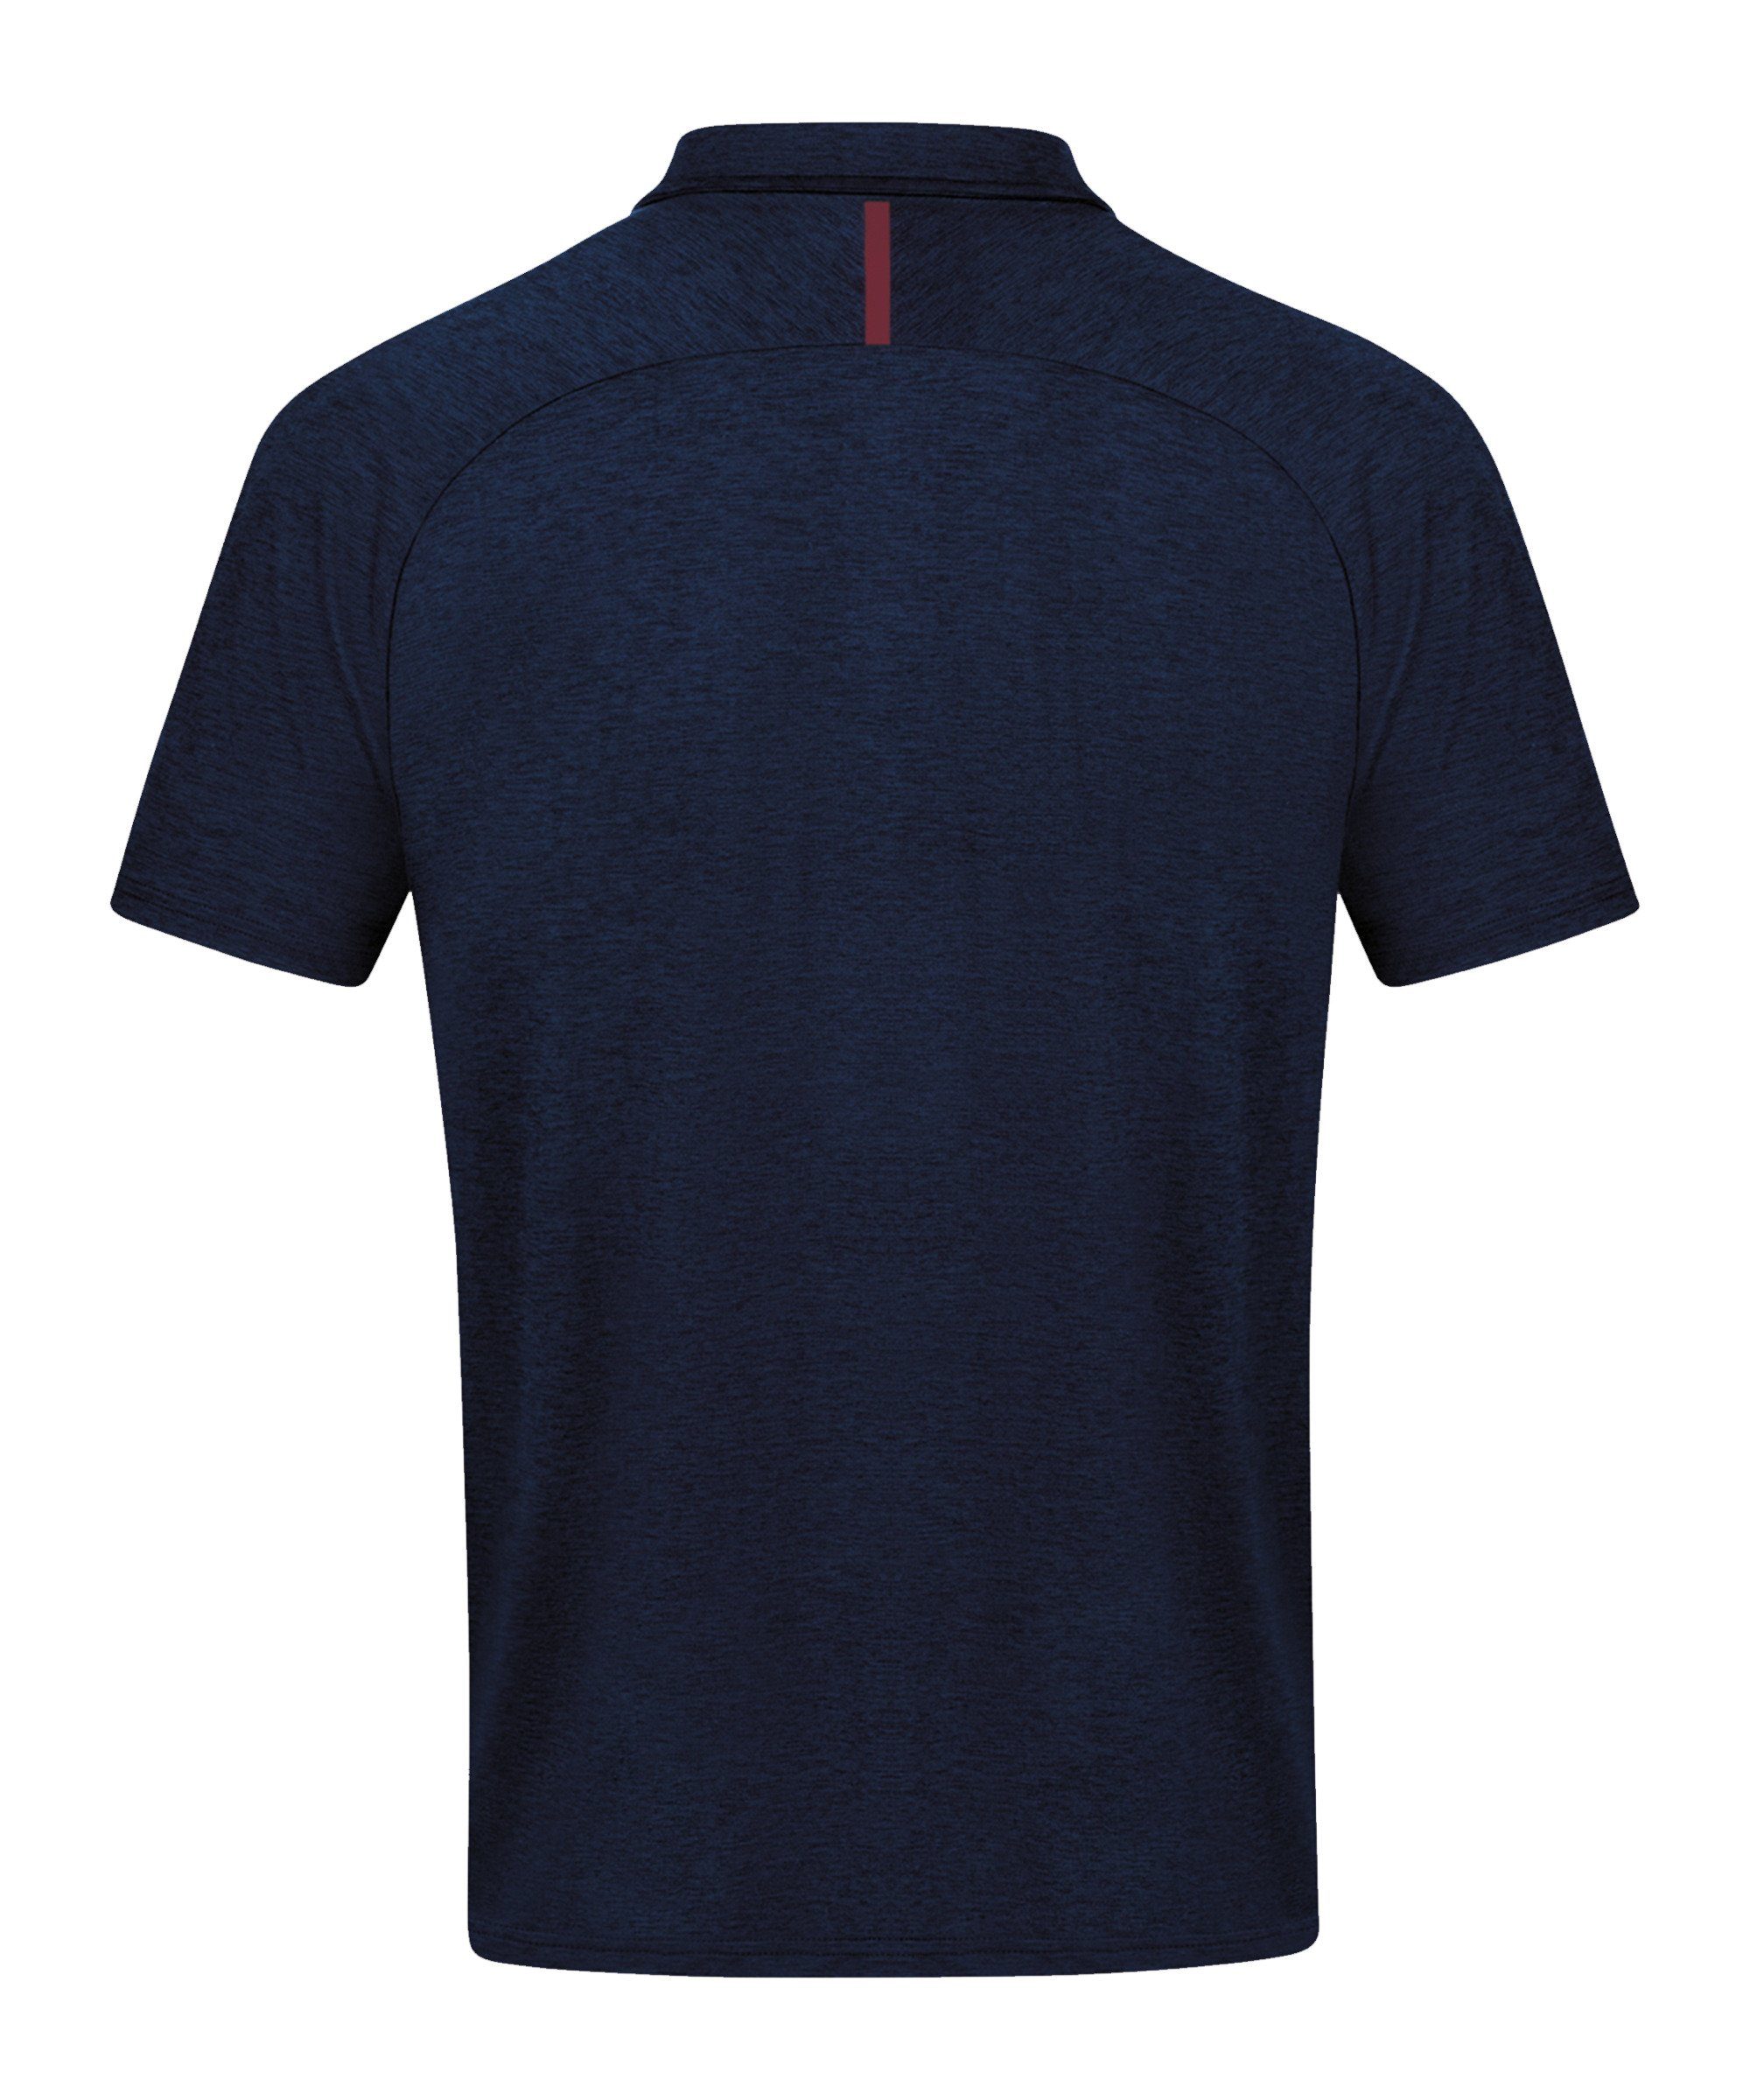 Challenge Jako blaurot default T-Shirt Polo